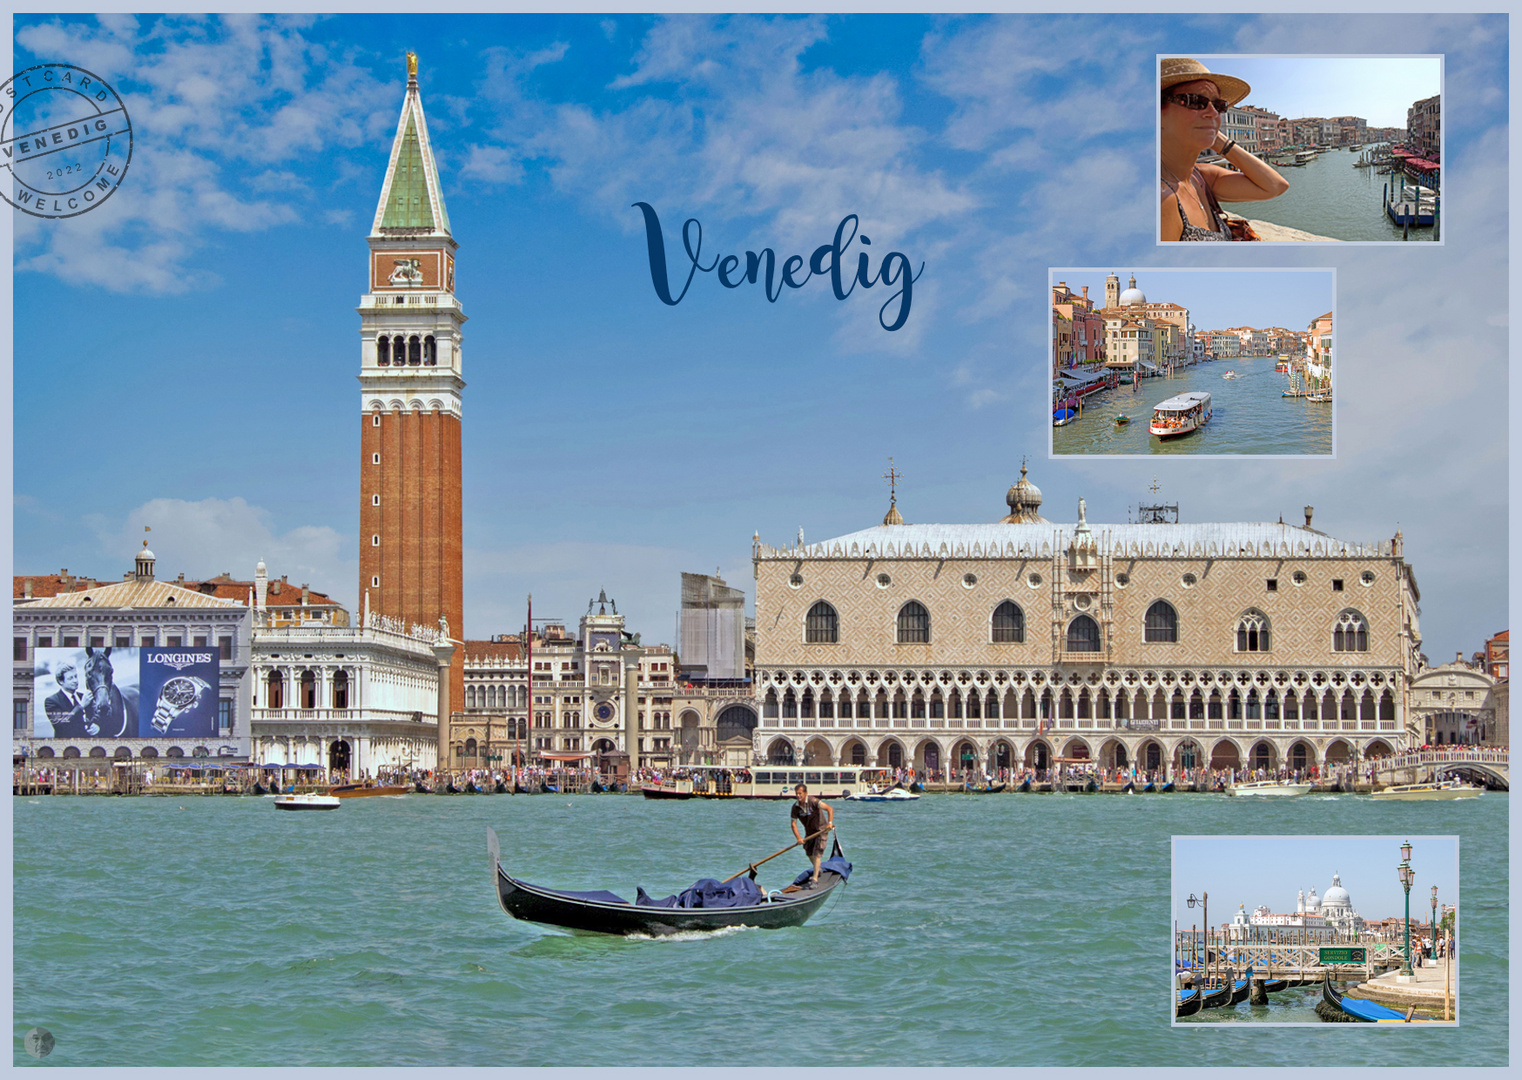 Send me a postcard from Venedig